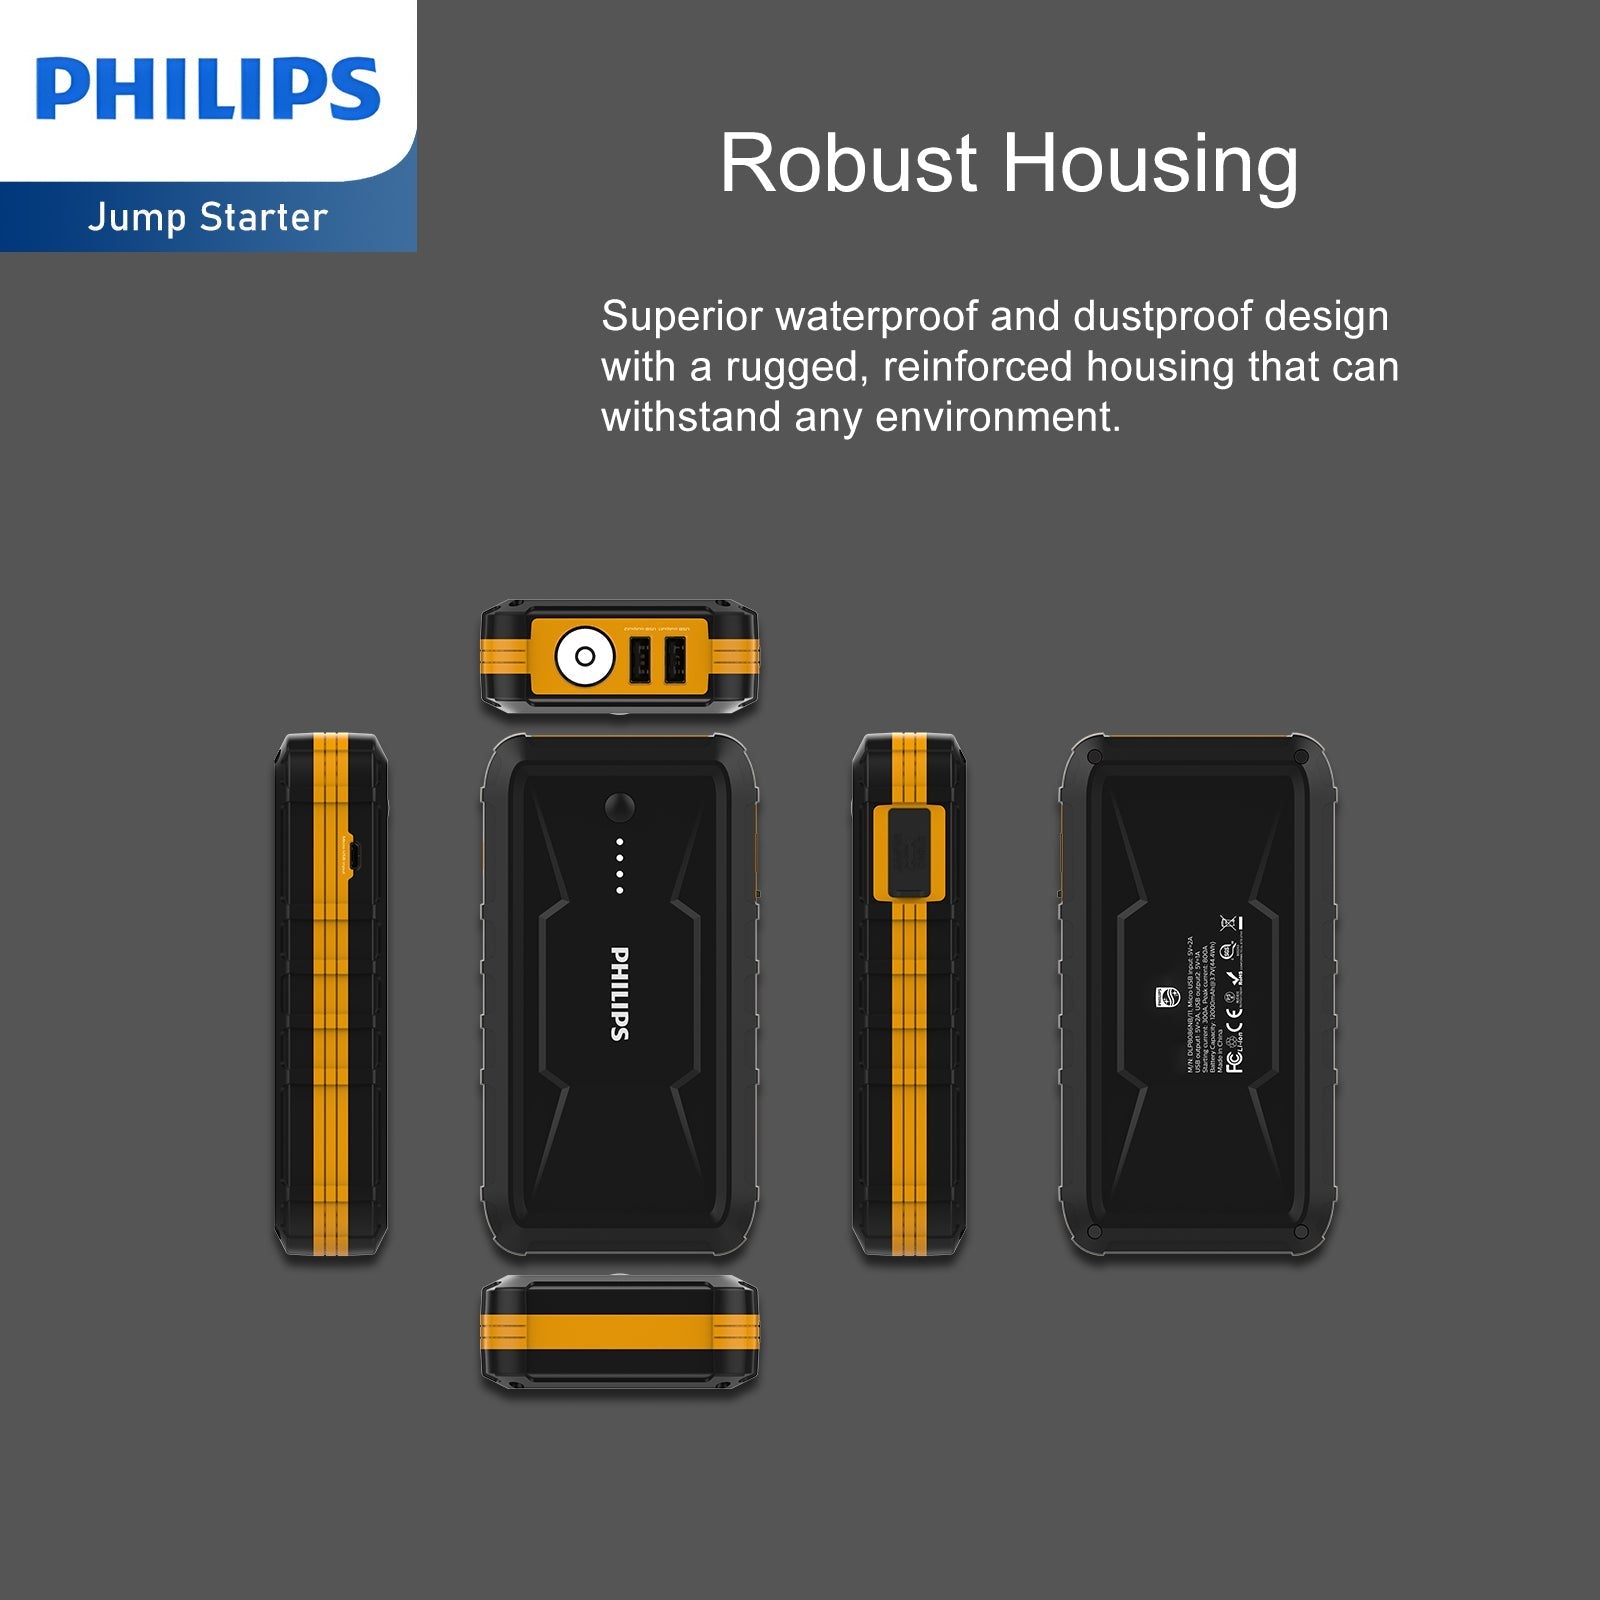 Philips Portable Car Battery Jump Starter